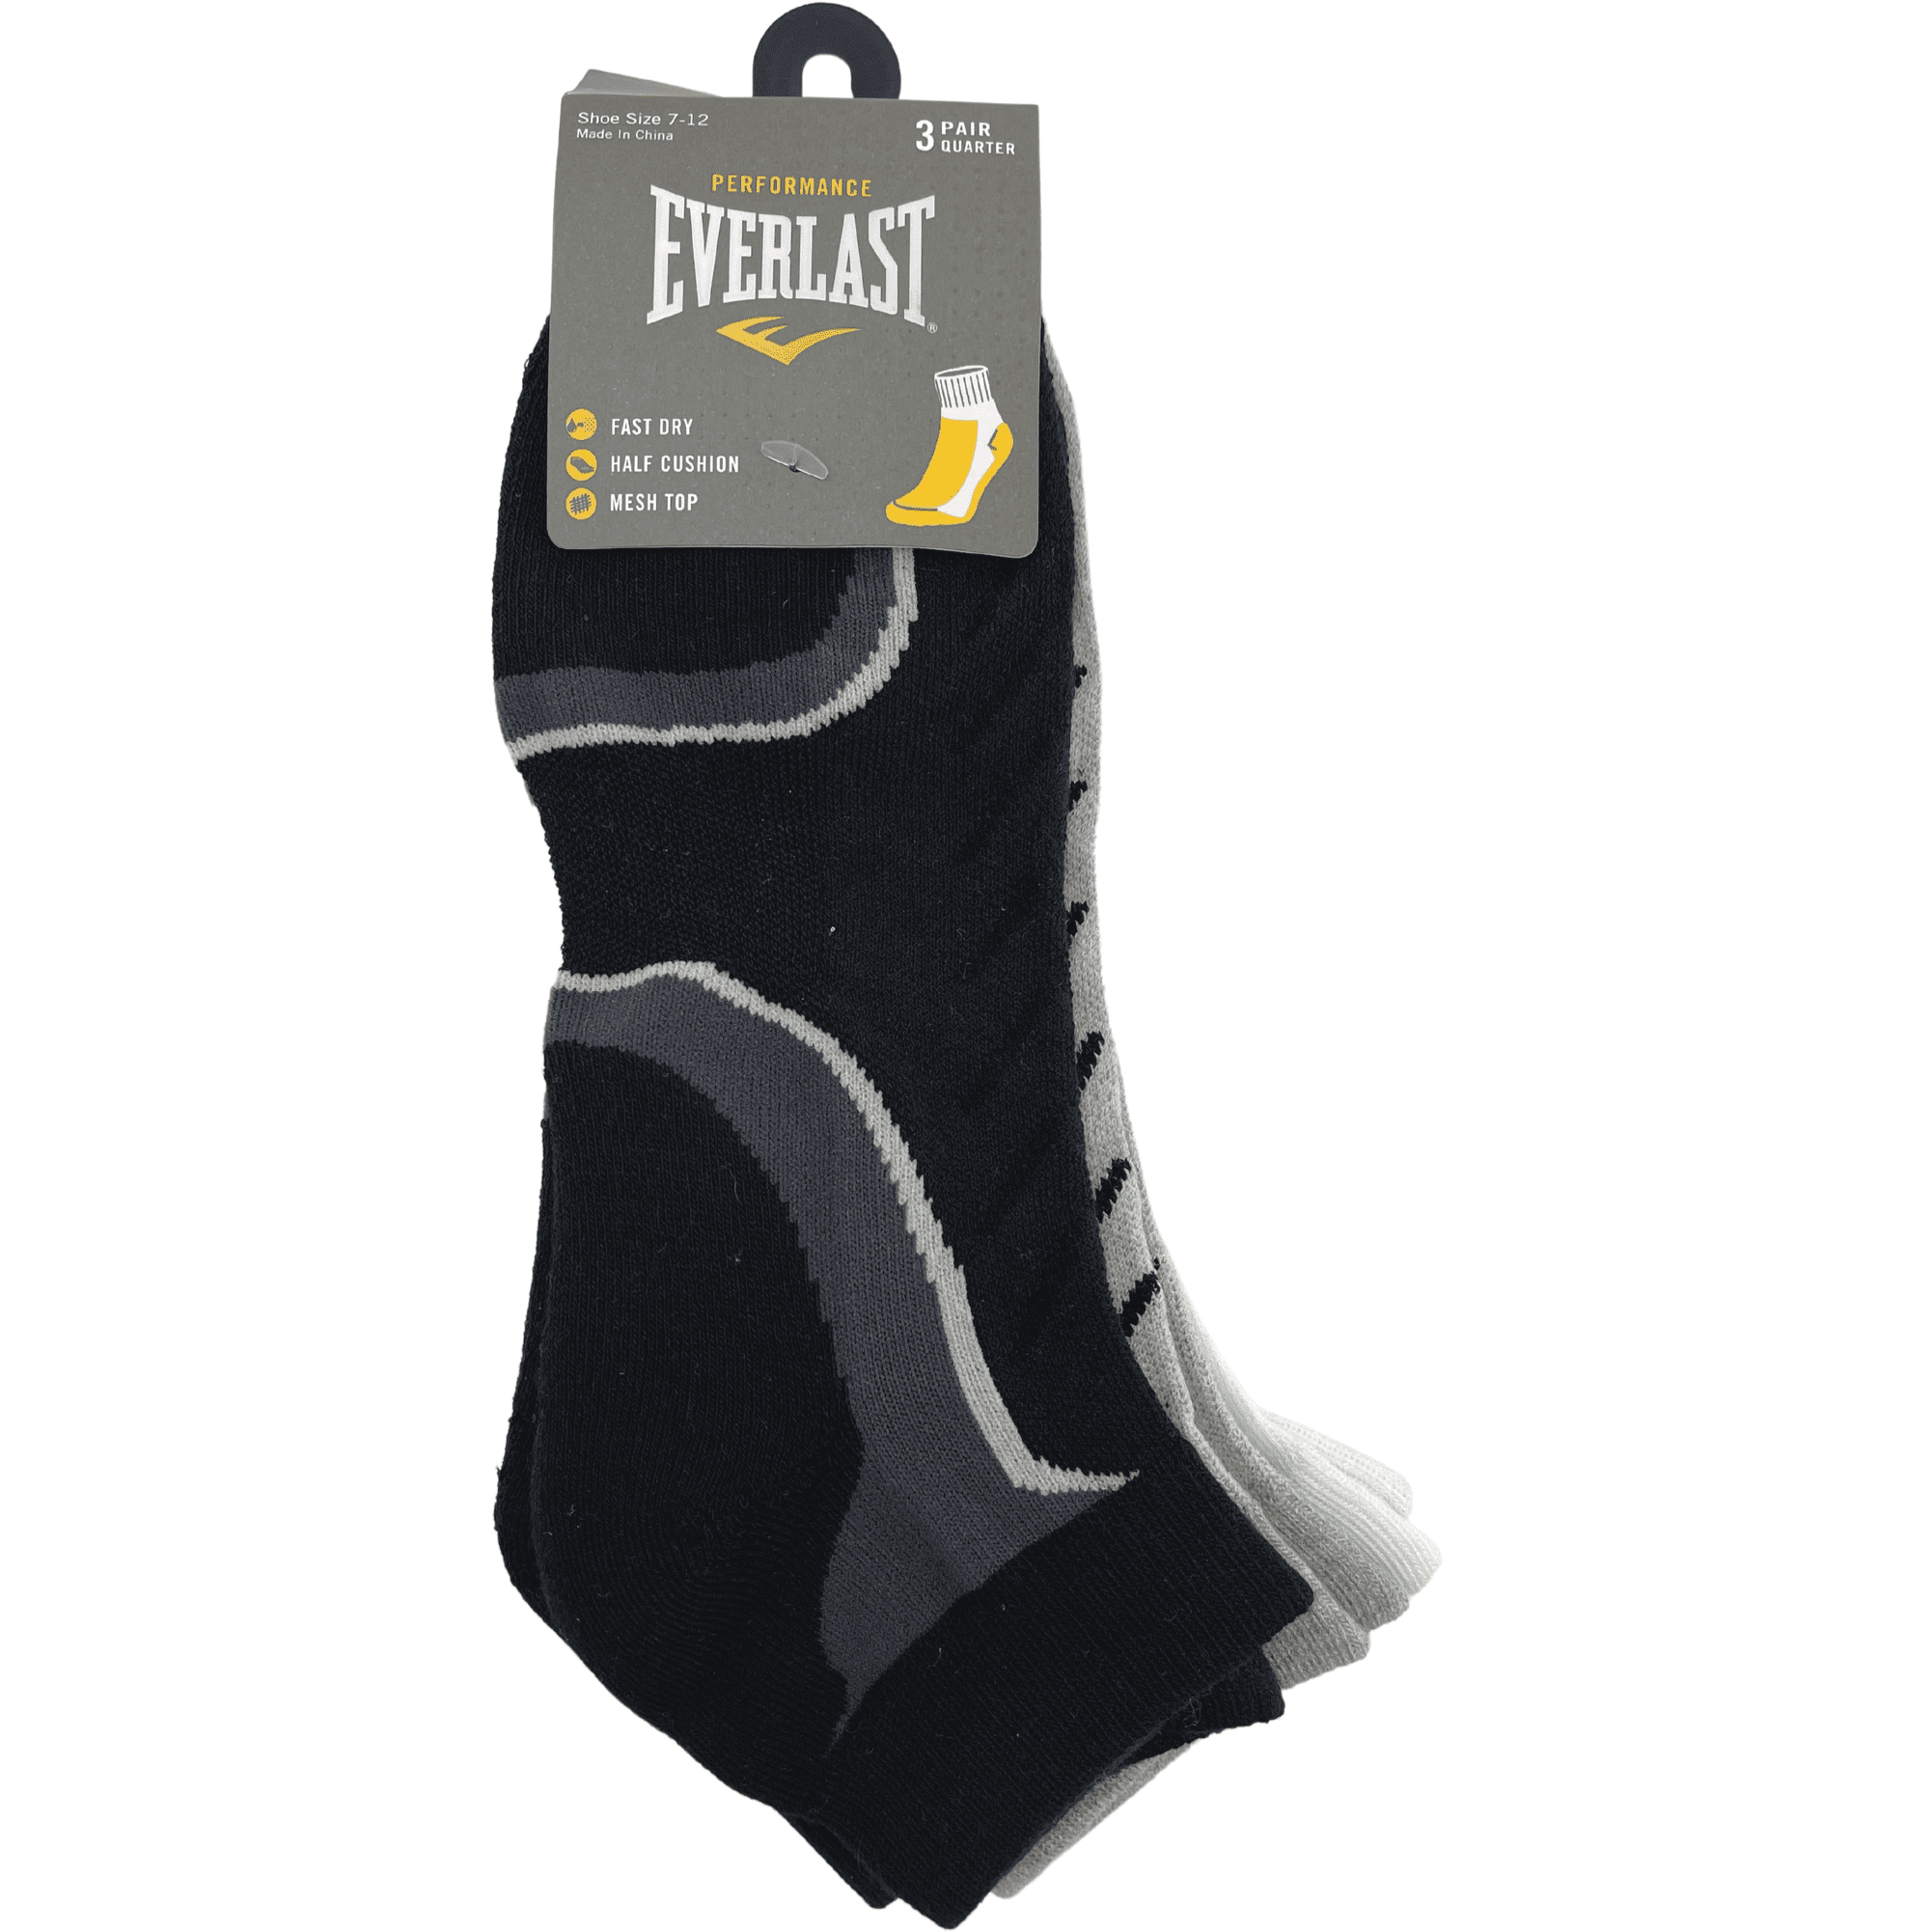 Everlast Men's Performance Socks / Ankle Socks / 3 Pairs / Grey, Black & White / Shoe Size 7-12